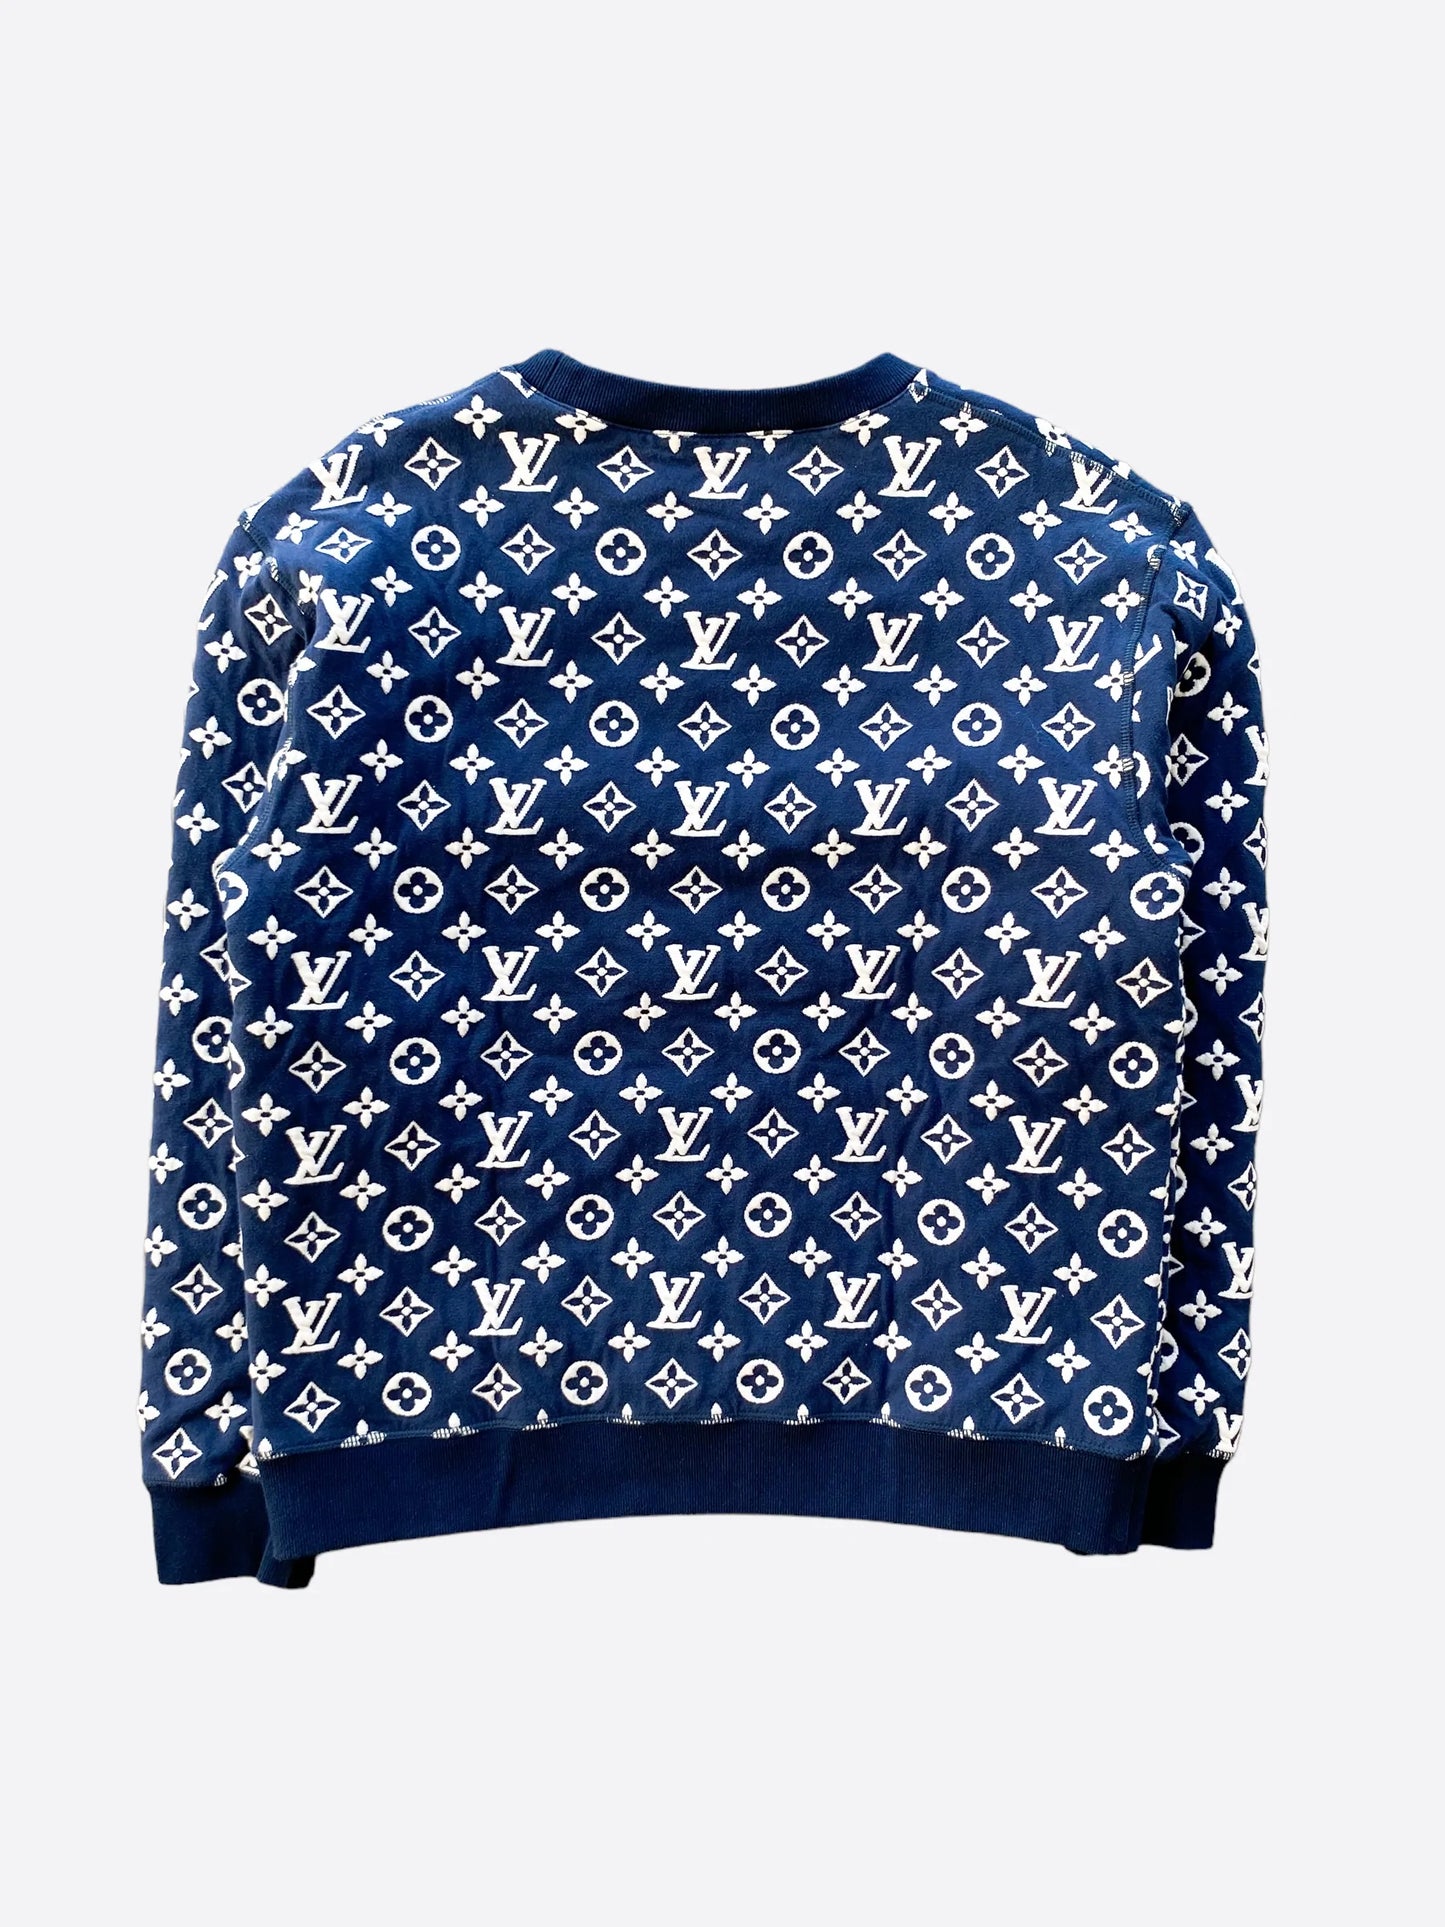 Louis Vuitton Navy Monogram Sweater